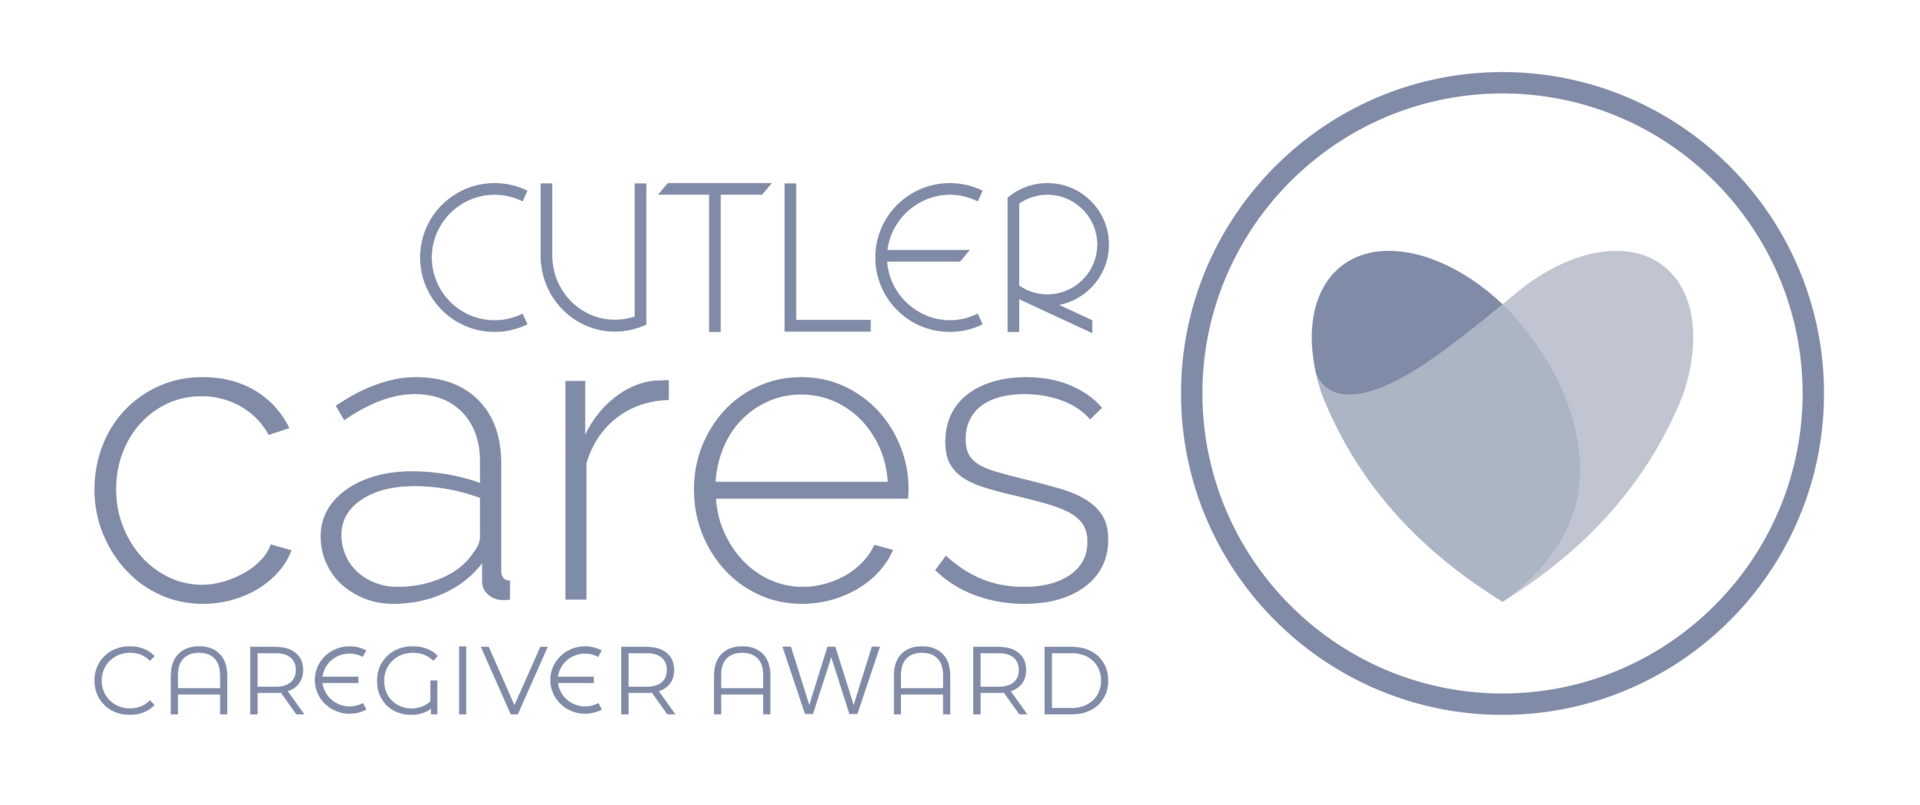 a logo for cutler cares caregiver award with a heart in a circle .